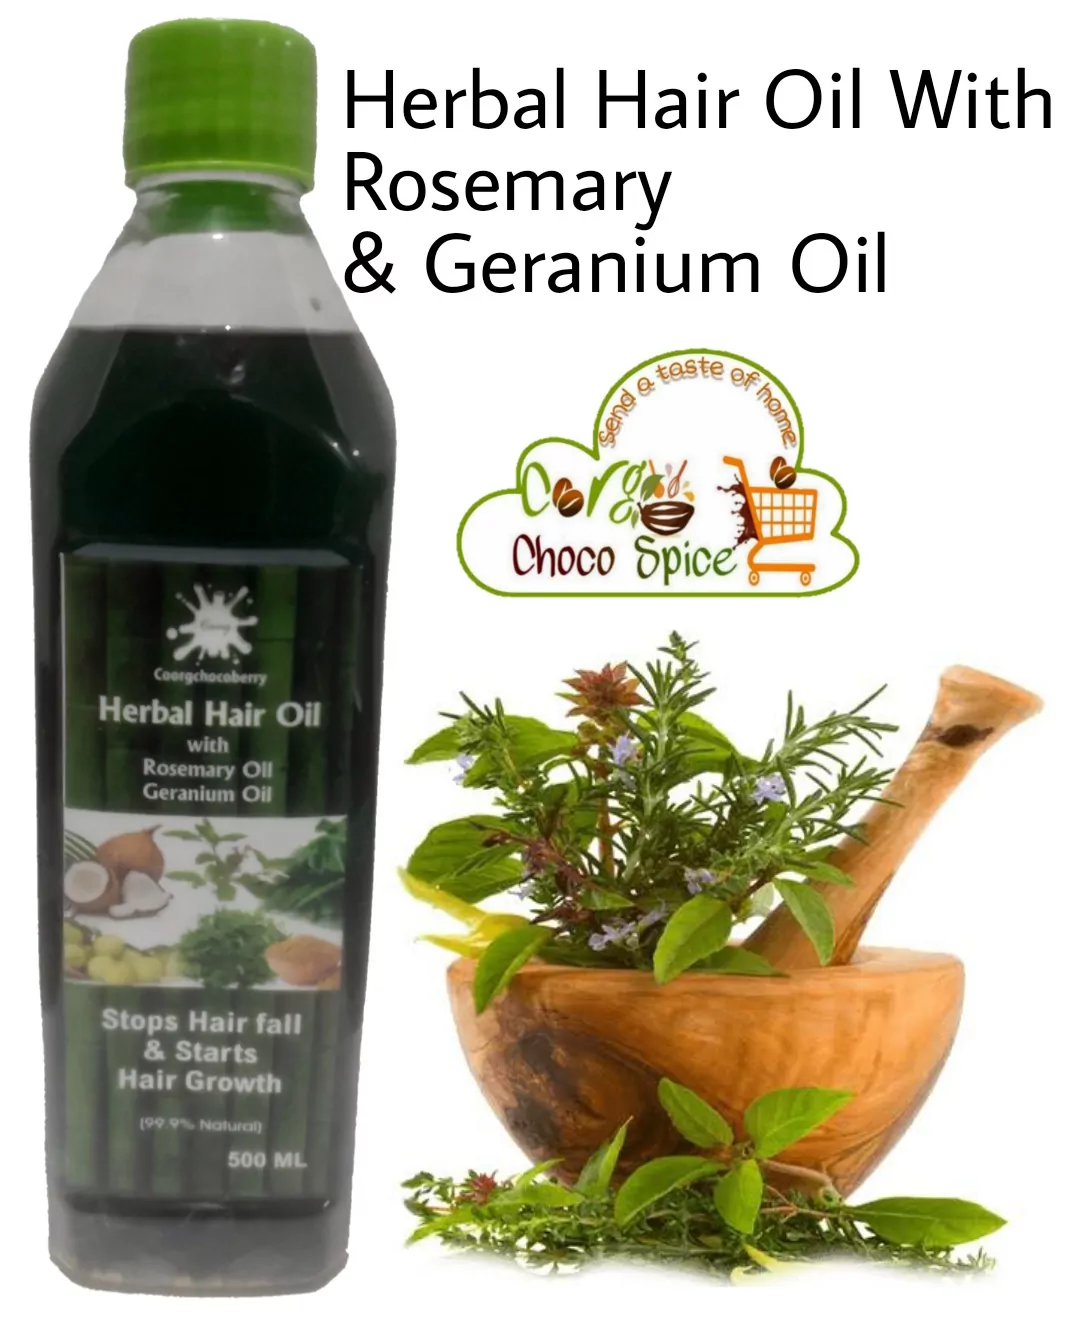 Buy Herbal Hair Oil With Rosemary Oil & Geranium Oil 500 Ml - Stop Hair Fal